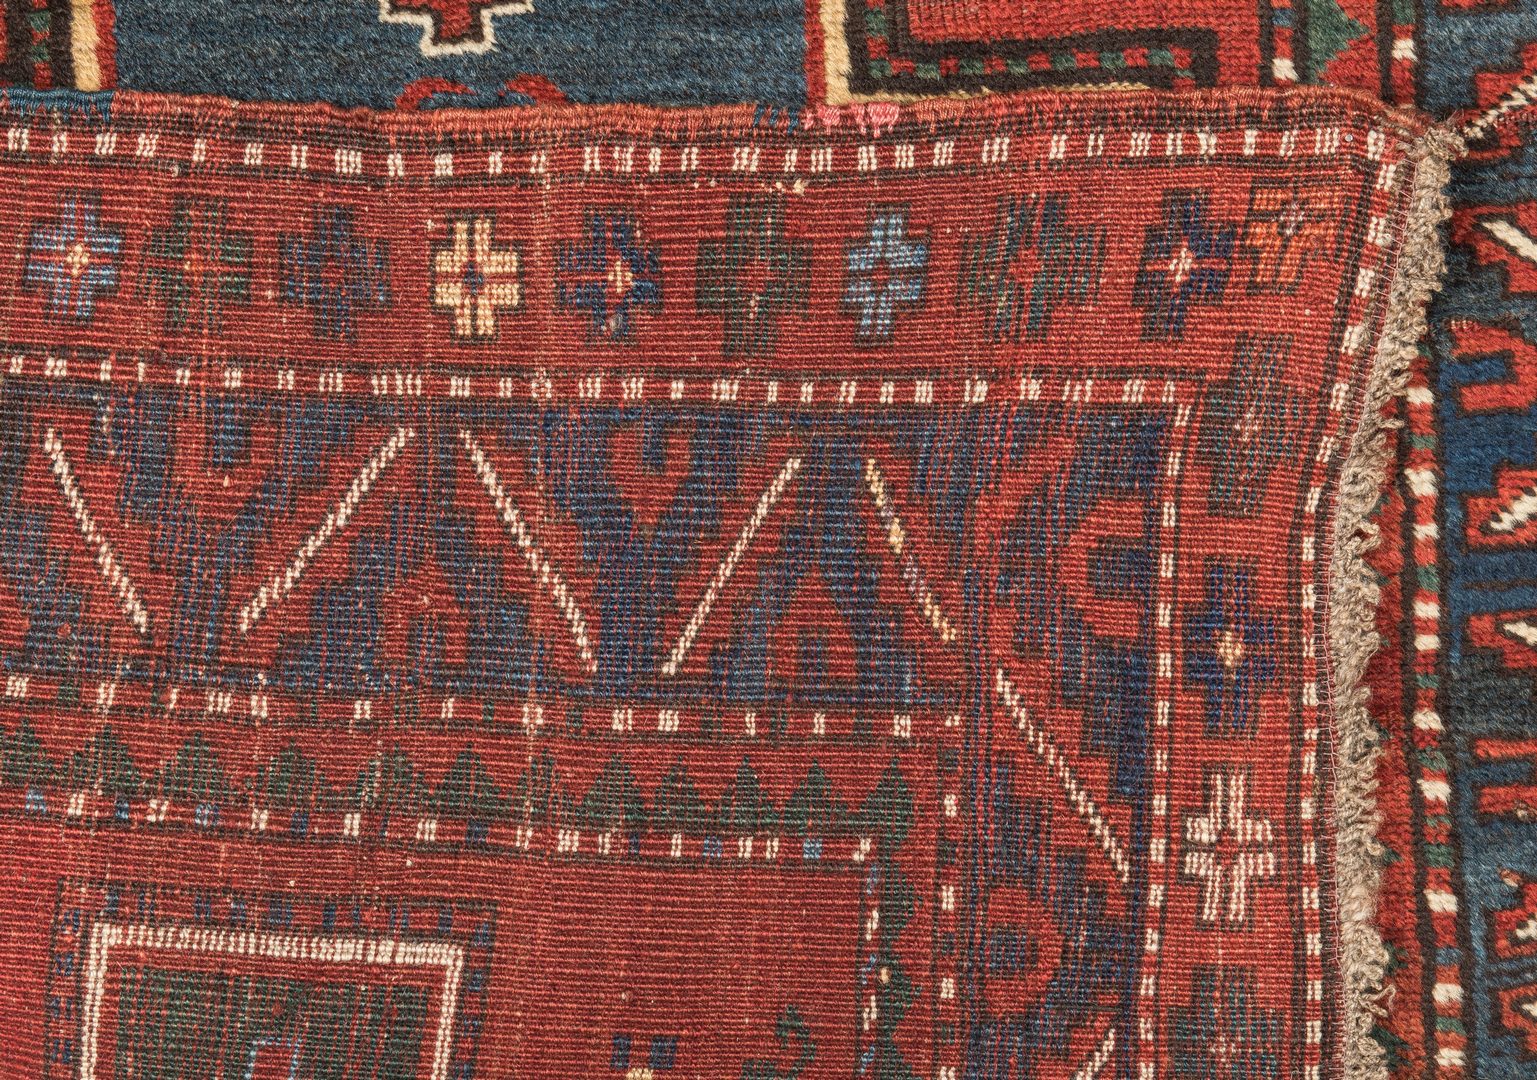 Lot 396: Antique Kazak area rug, 3'10" x 5'8"